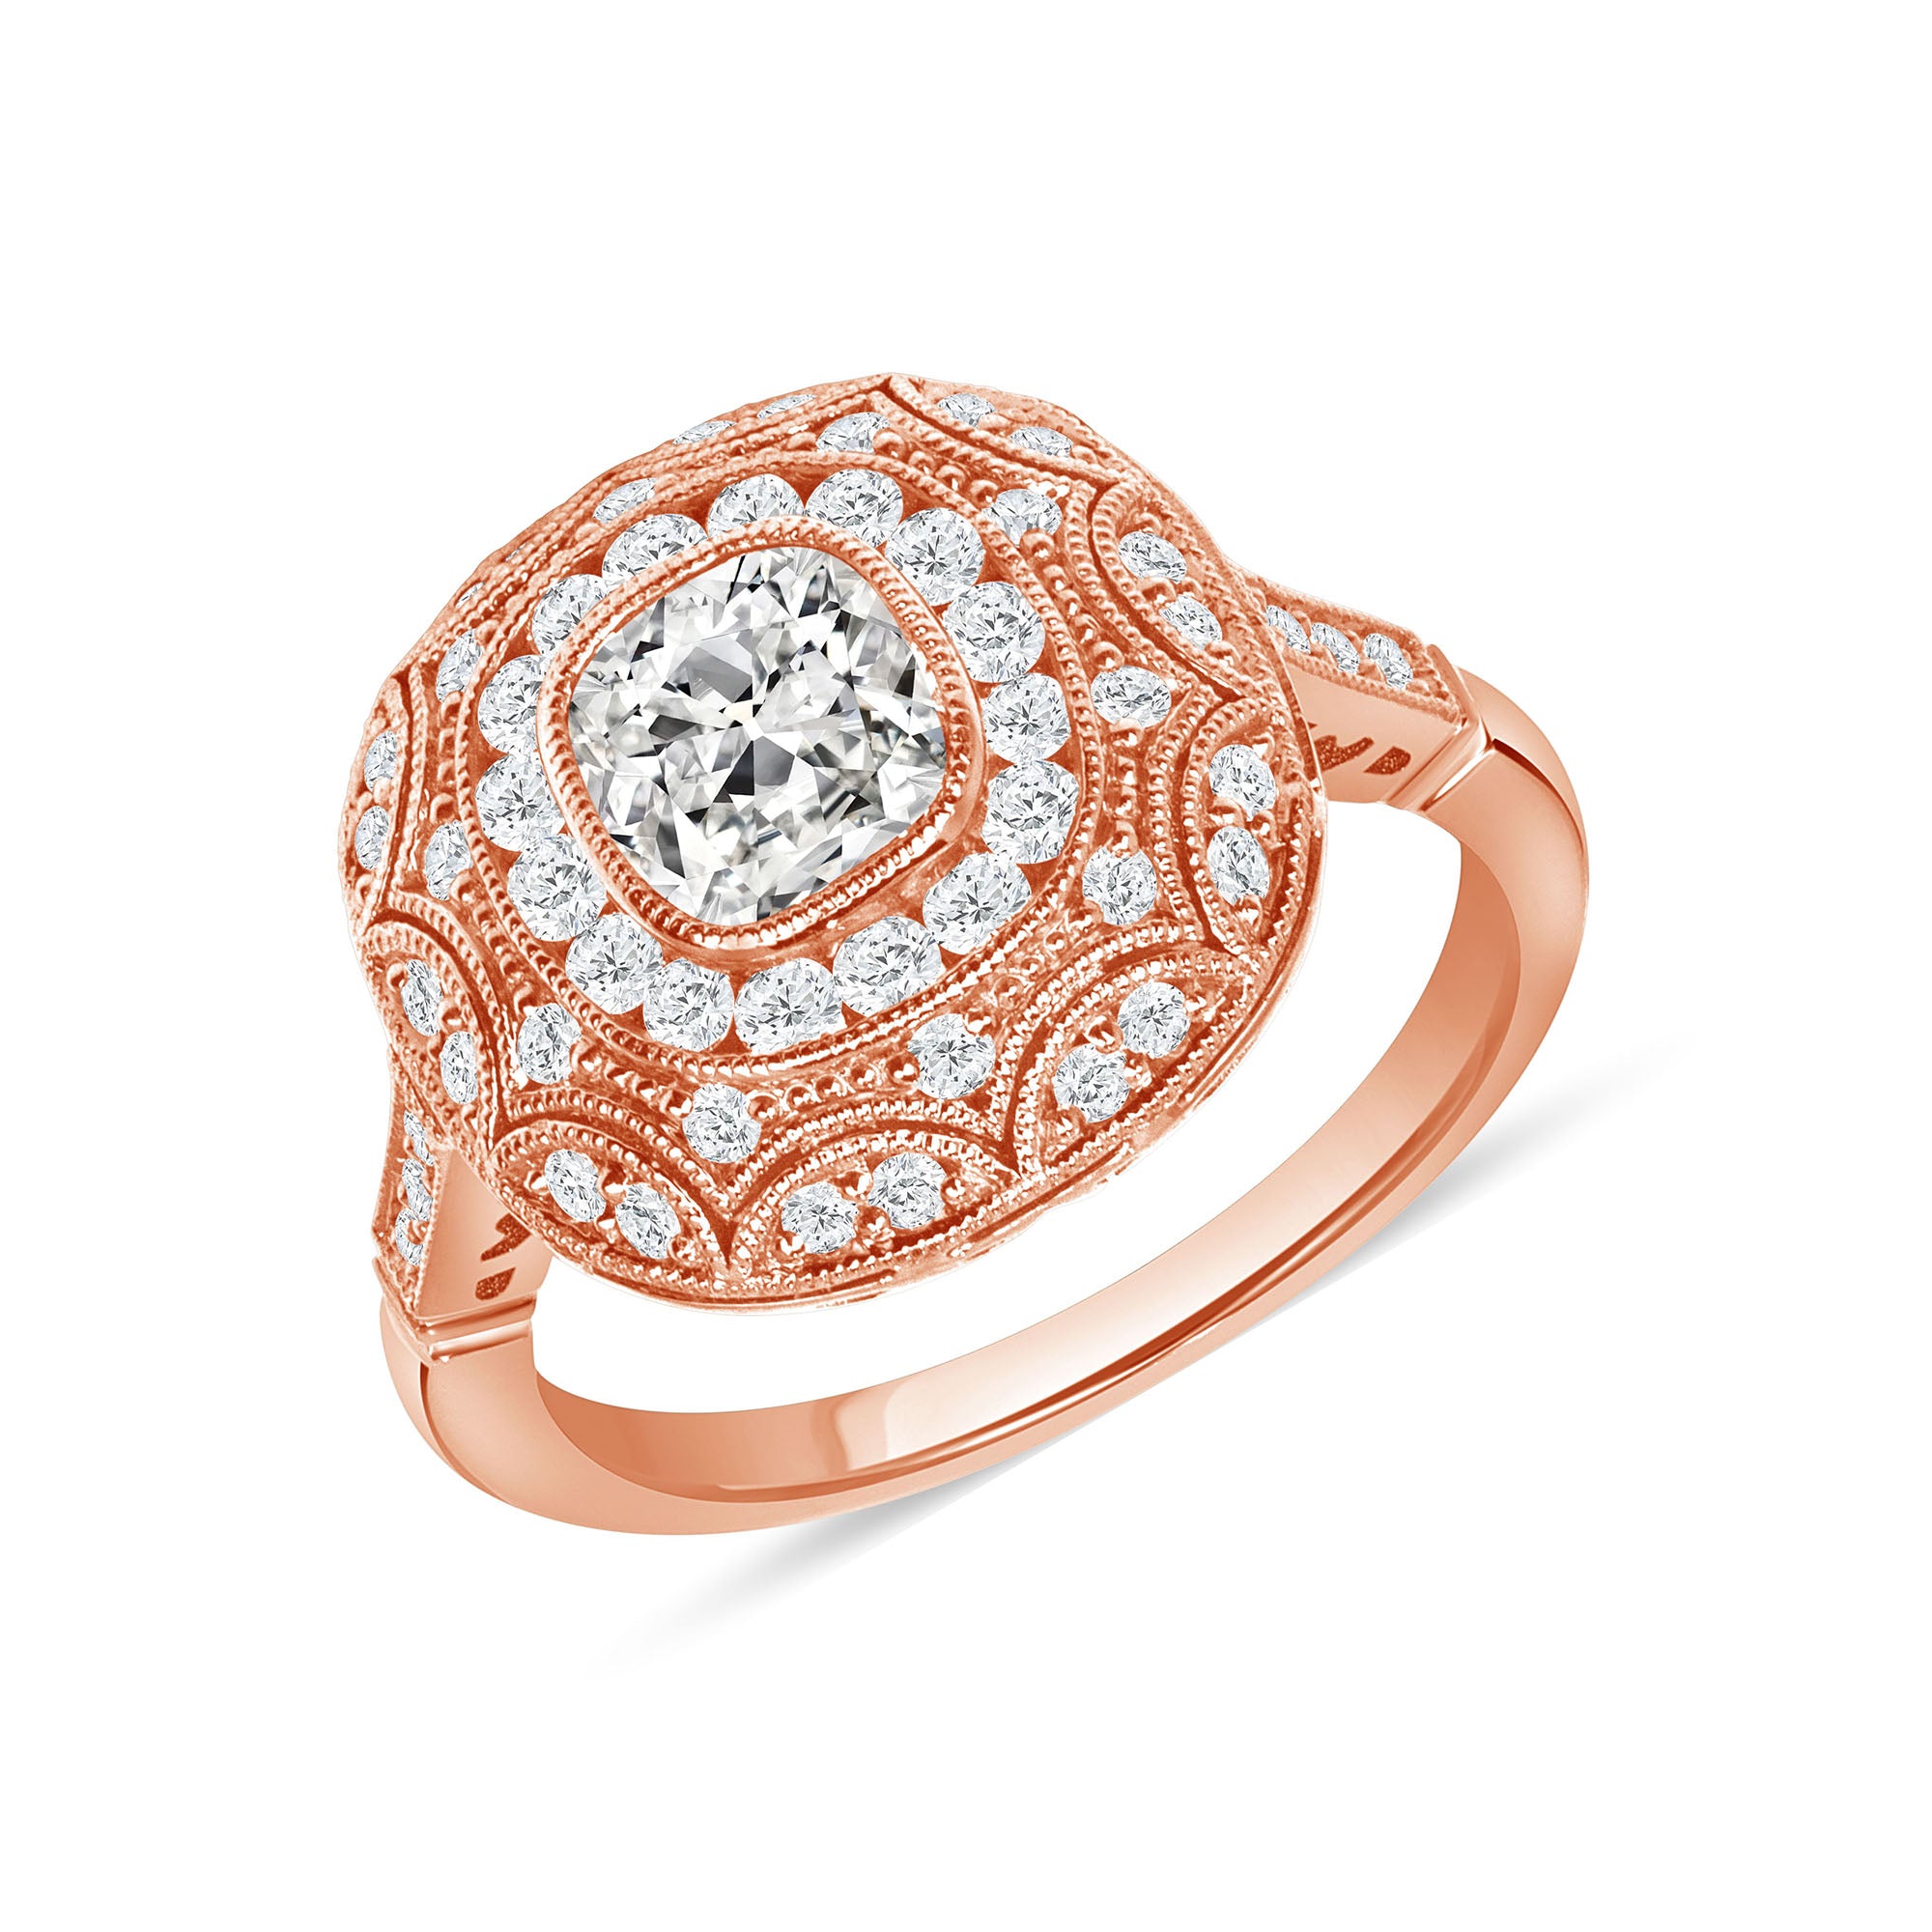 1.59ctw Cushion Cut Halo Melee Diamond Ring in 14K Rose Gold